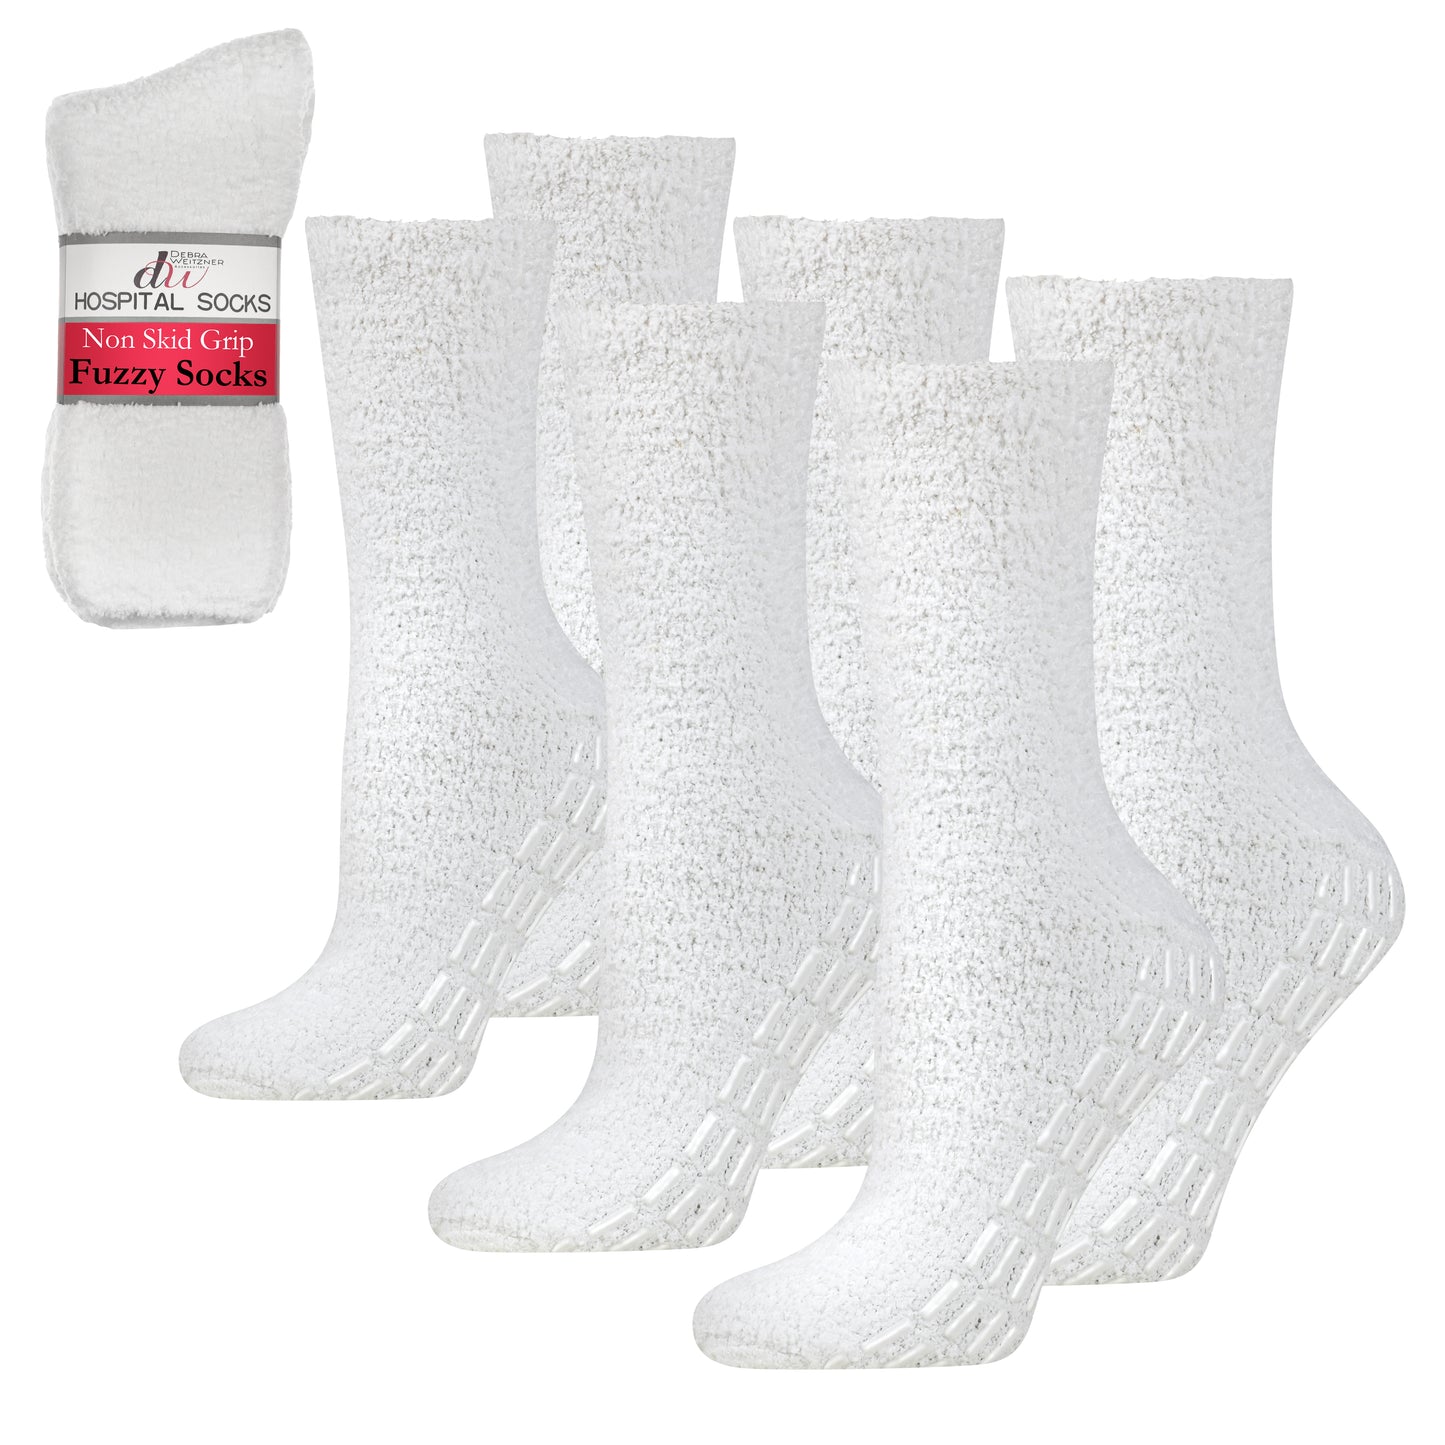 Fuzzy Hospital Socks - Non Slip Grip - 3 Pairs